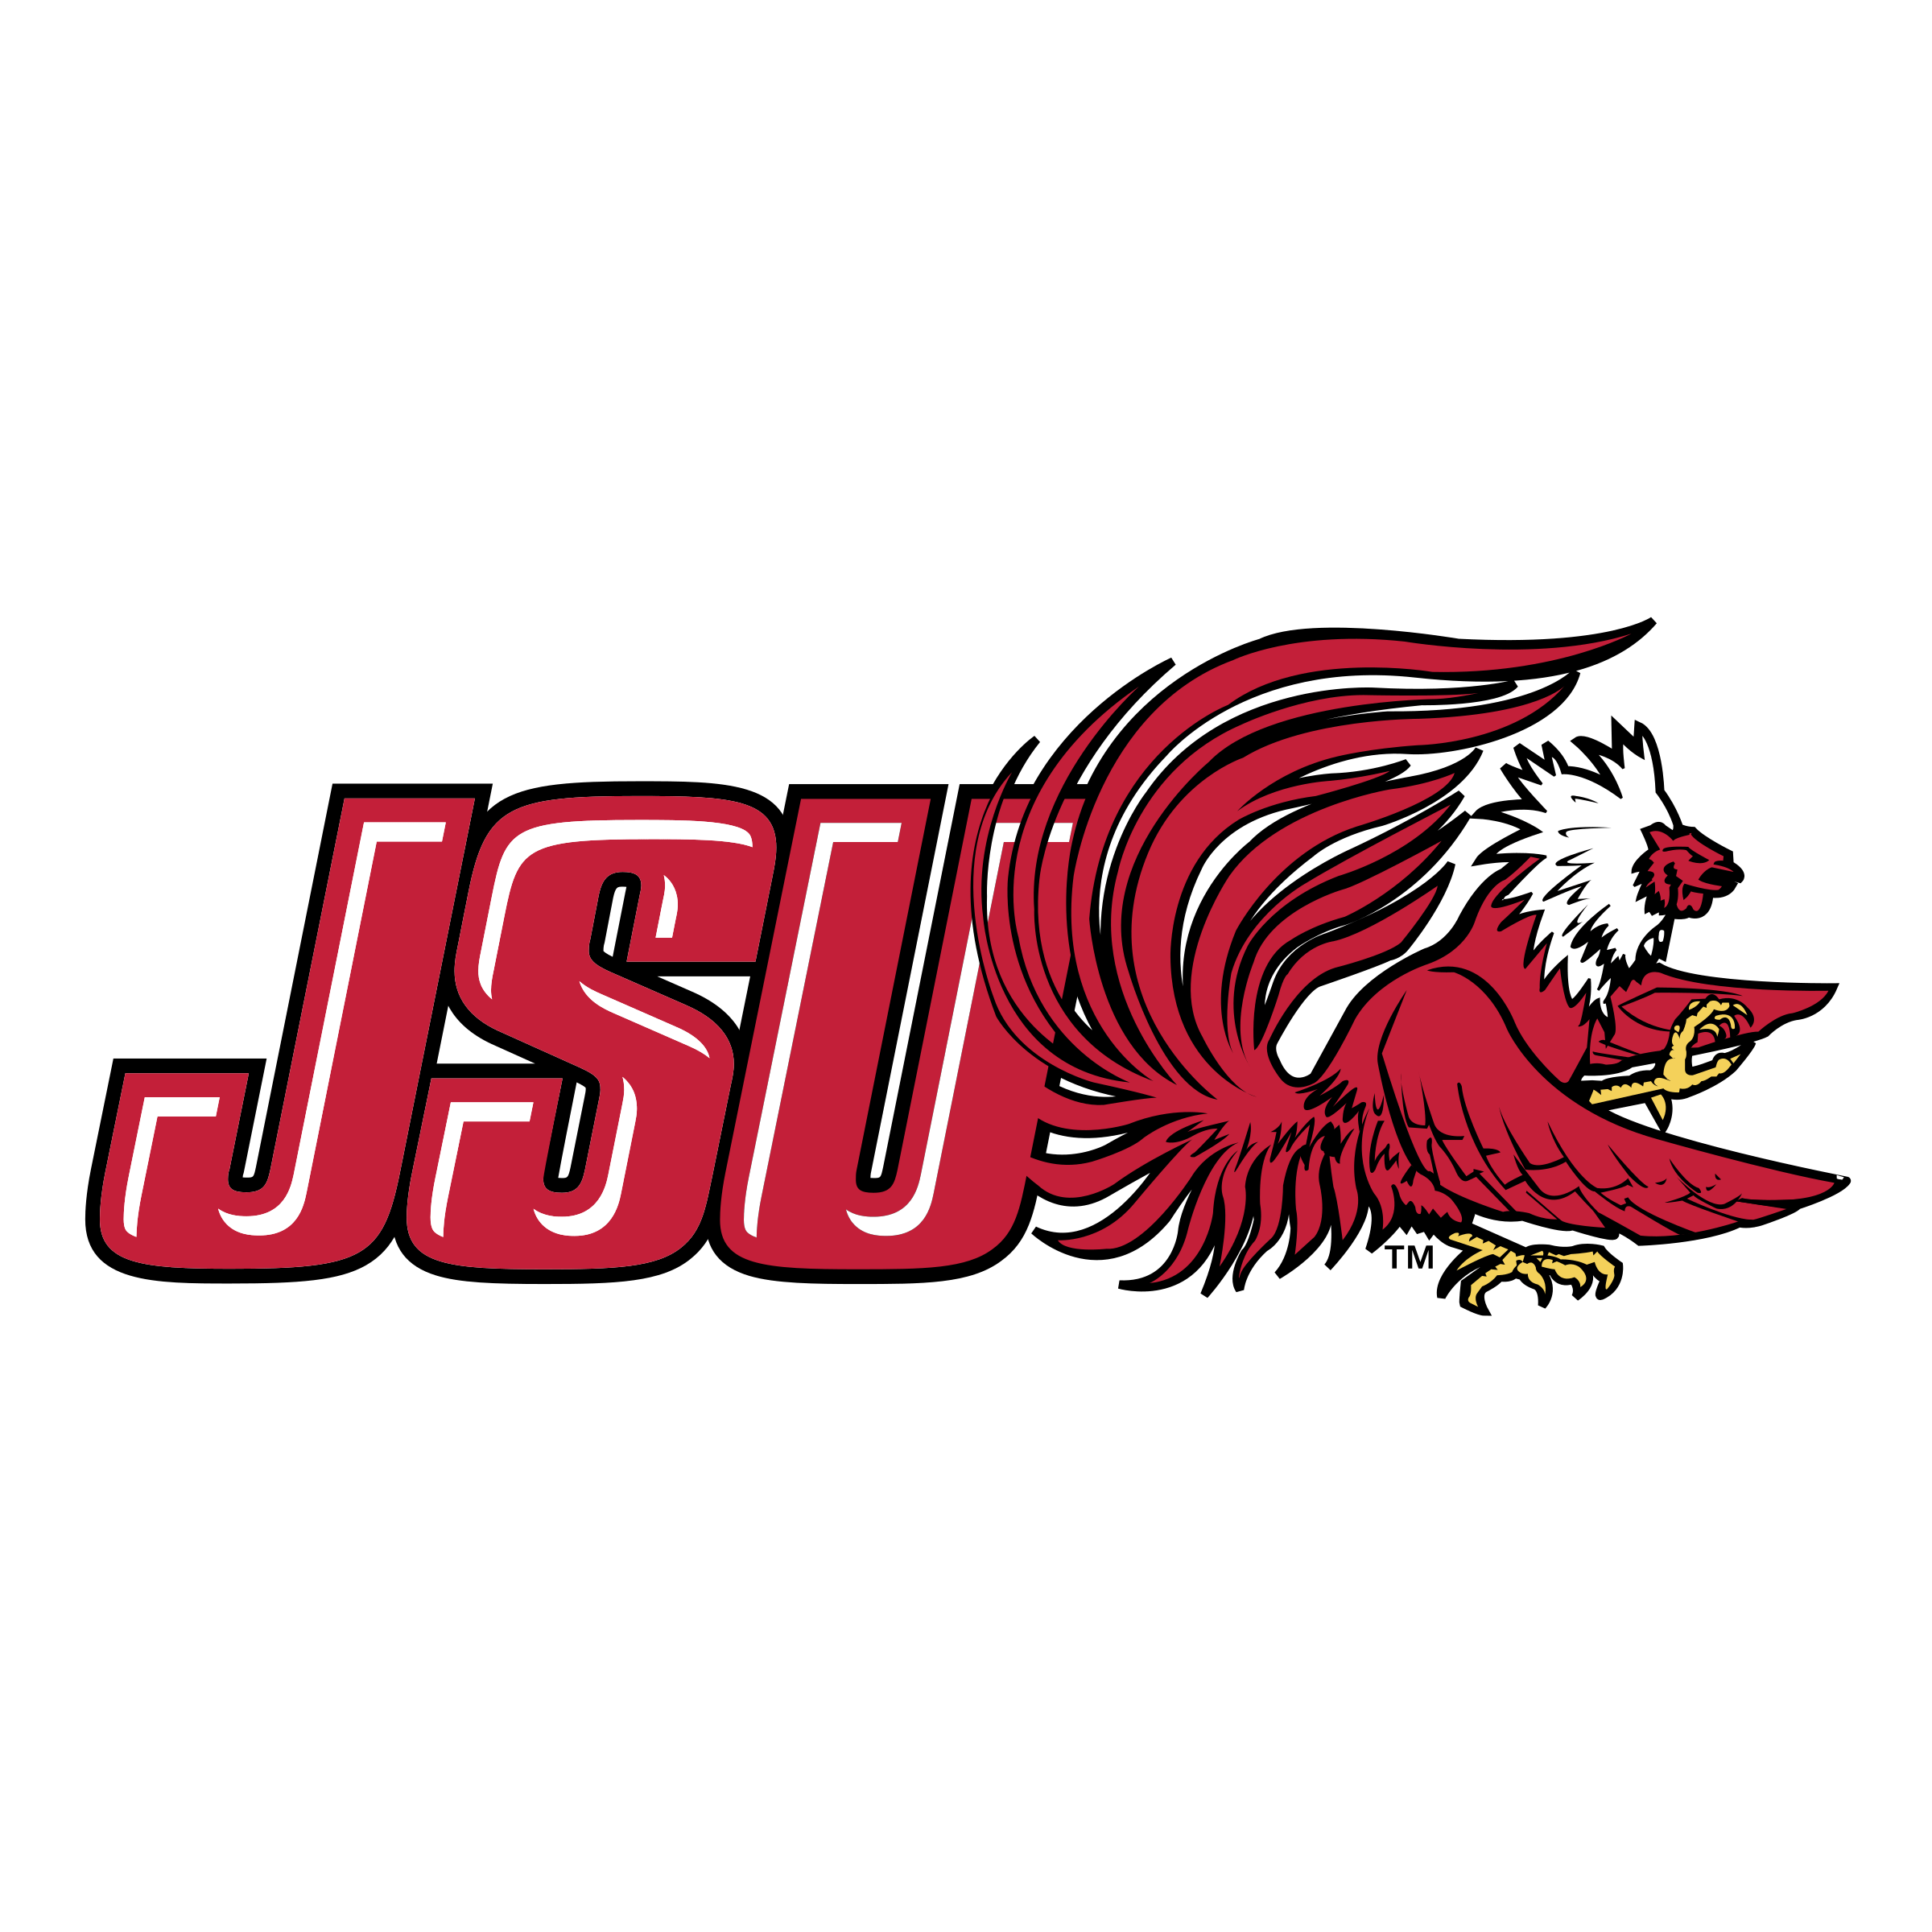 JSU Logo - JSU Gamecocks Logo PNG Transparent & SVG Vector - Freebie Supply